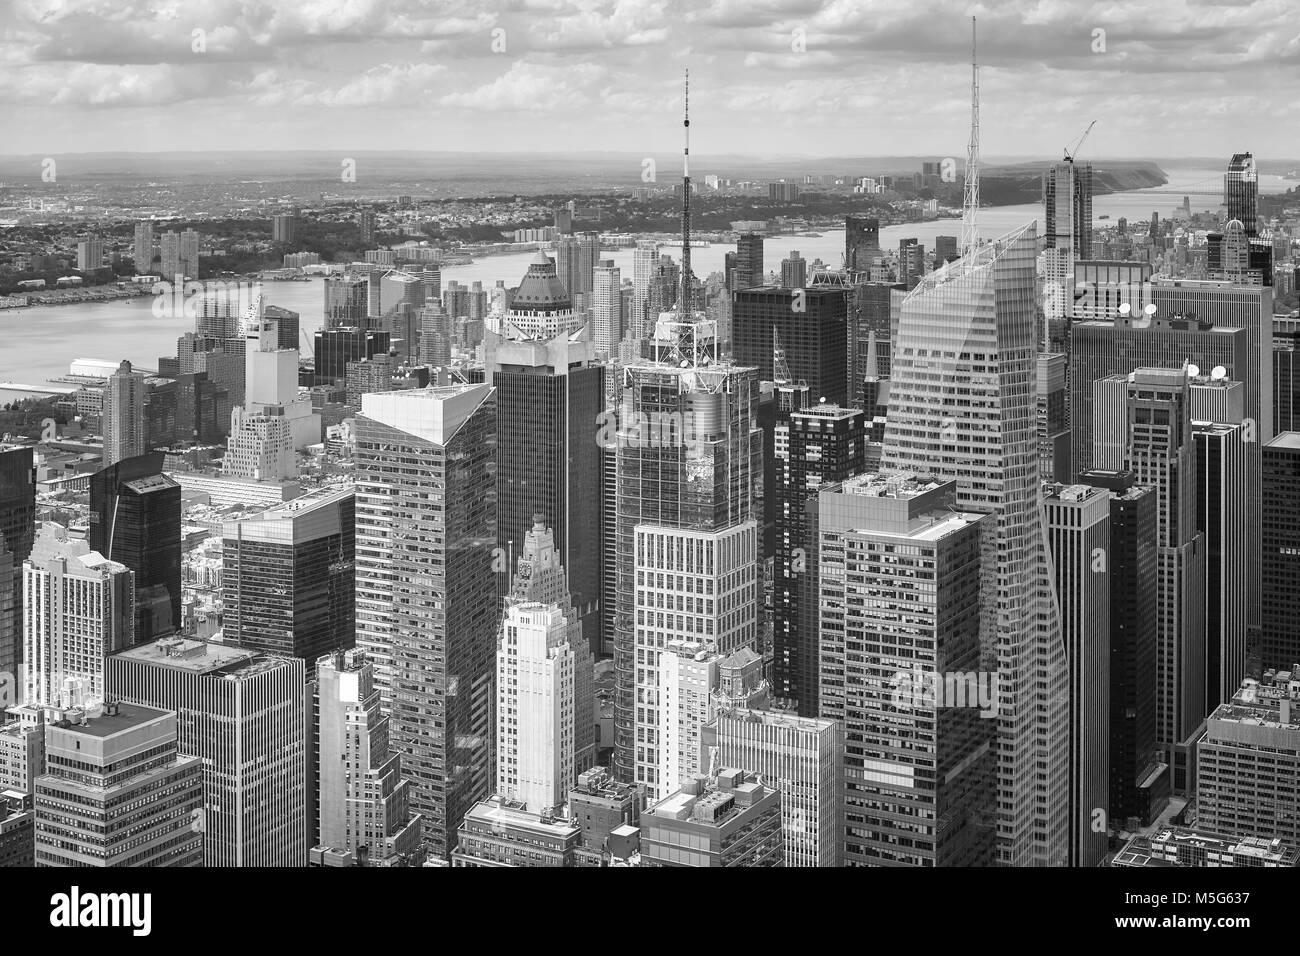 Immagine in bianco e nero di Manhattan, New York City, Stati Uniti d'America. Foto Stock